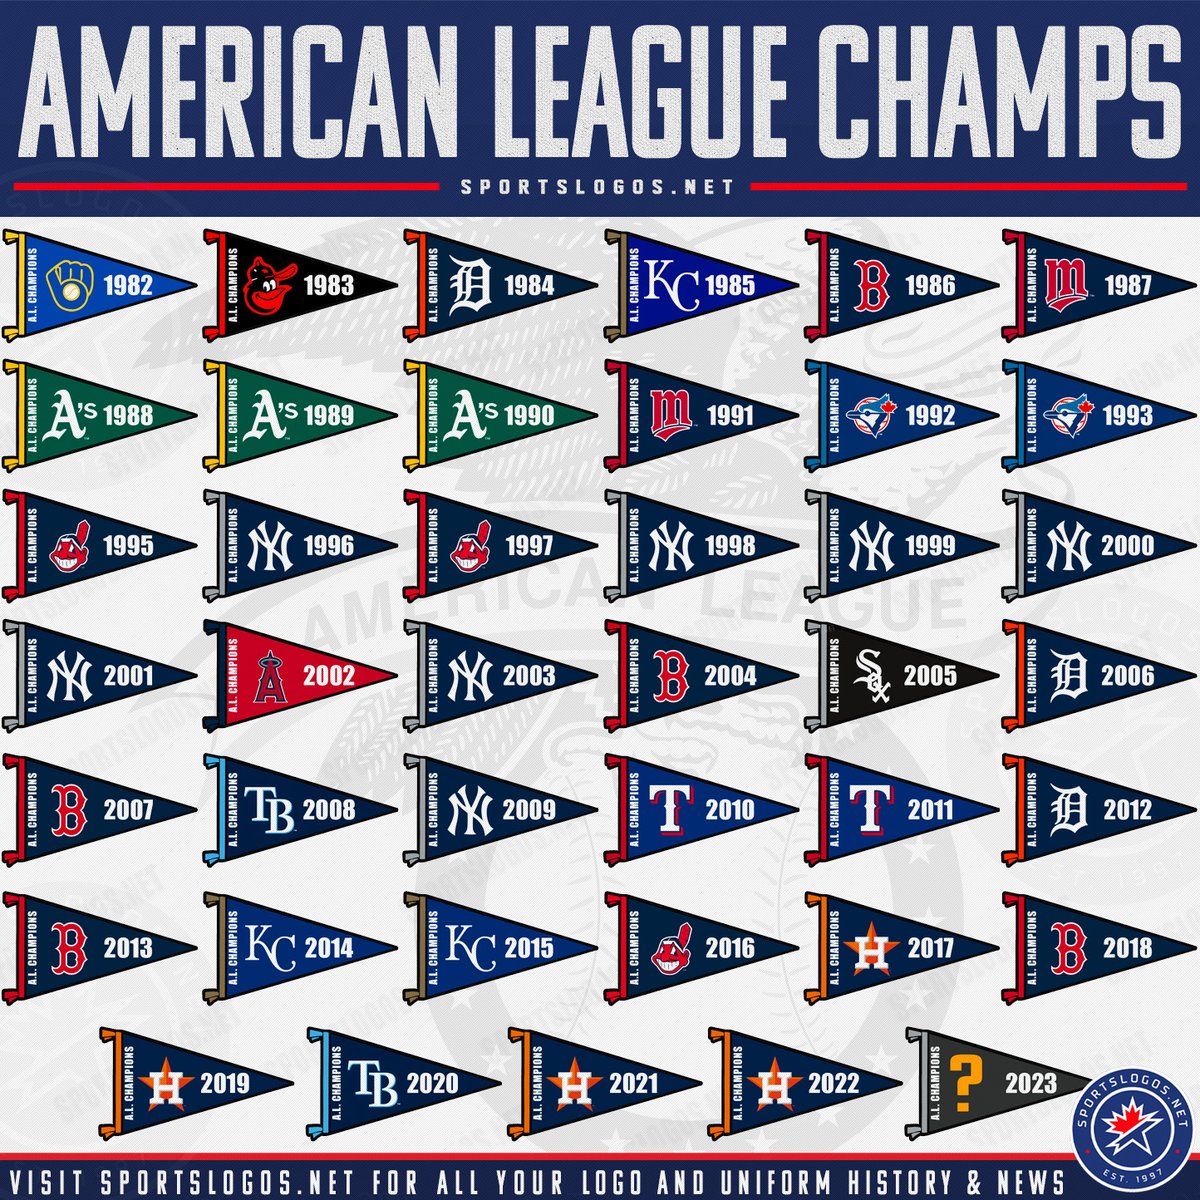 New York Yankees Logos - American League (AL) - Chris Creamer's Sports Logos  Page 